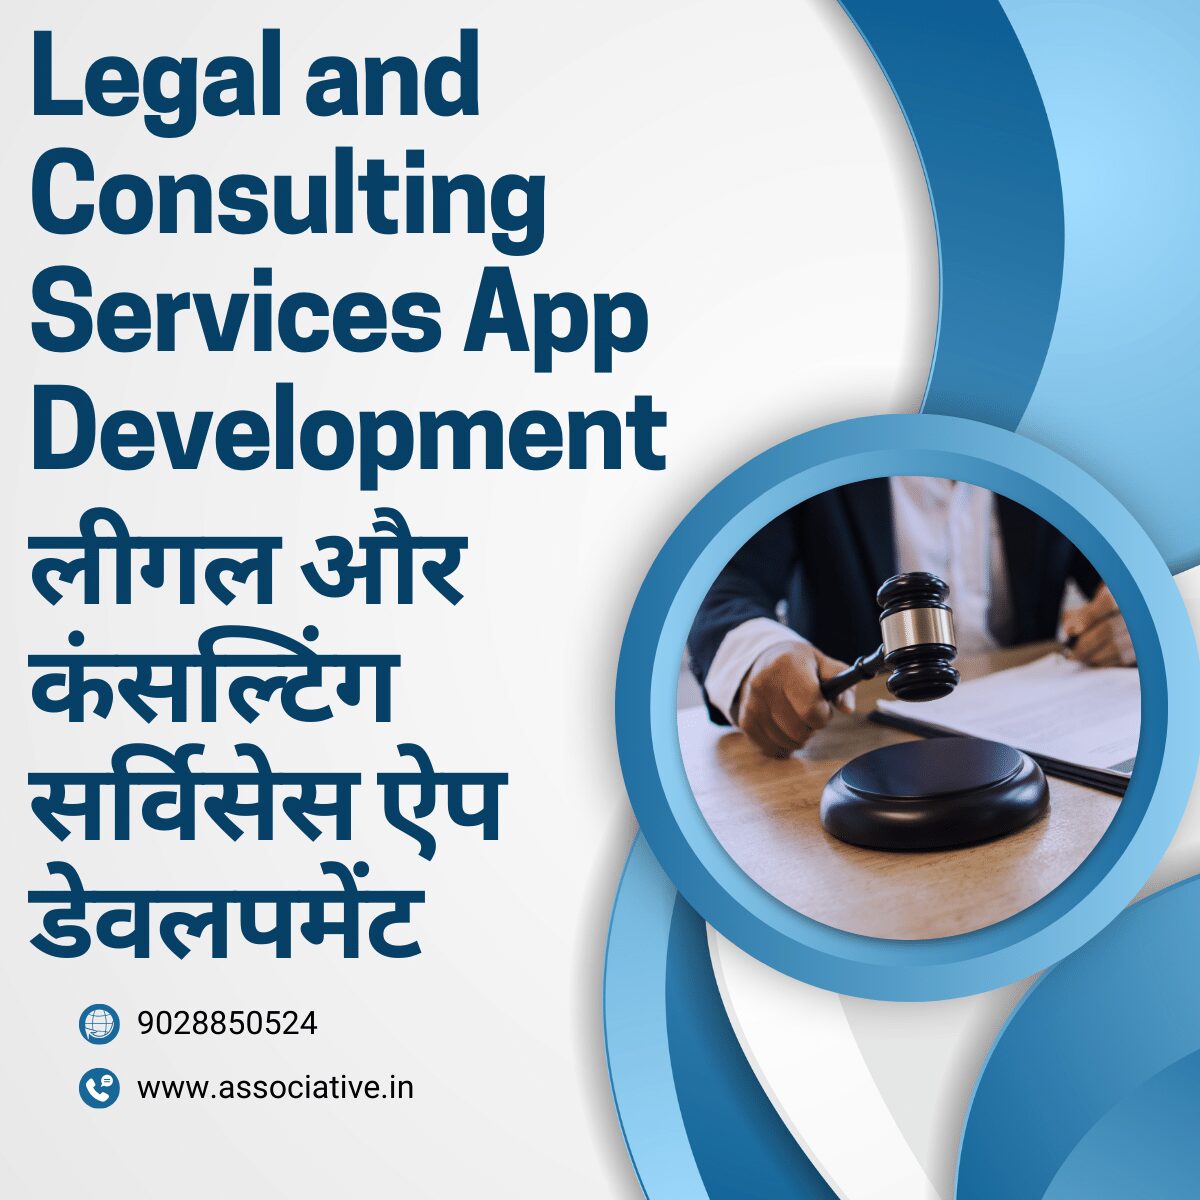 Legal and Consulting Services App Development लीगल और कंसल्टिंग सर्विसेस ऐप डेवलपमेंट